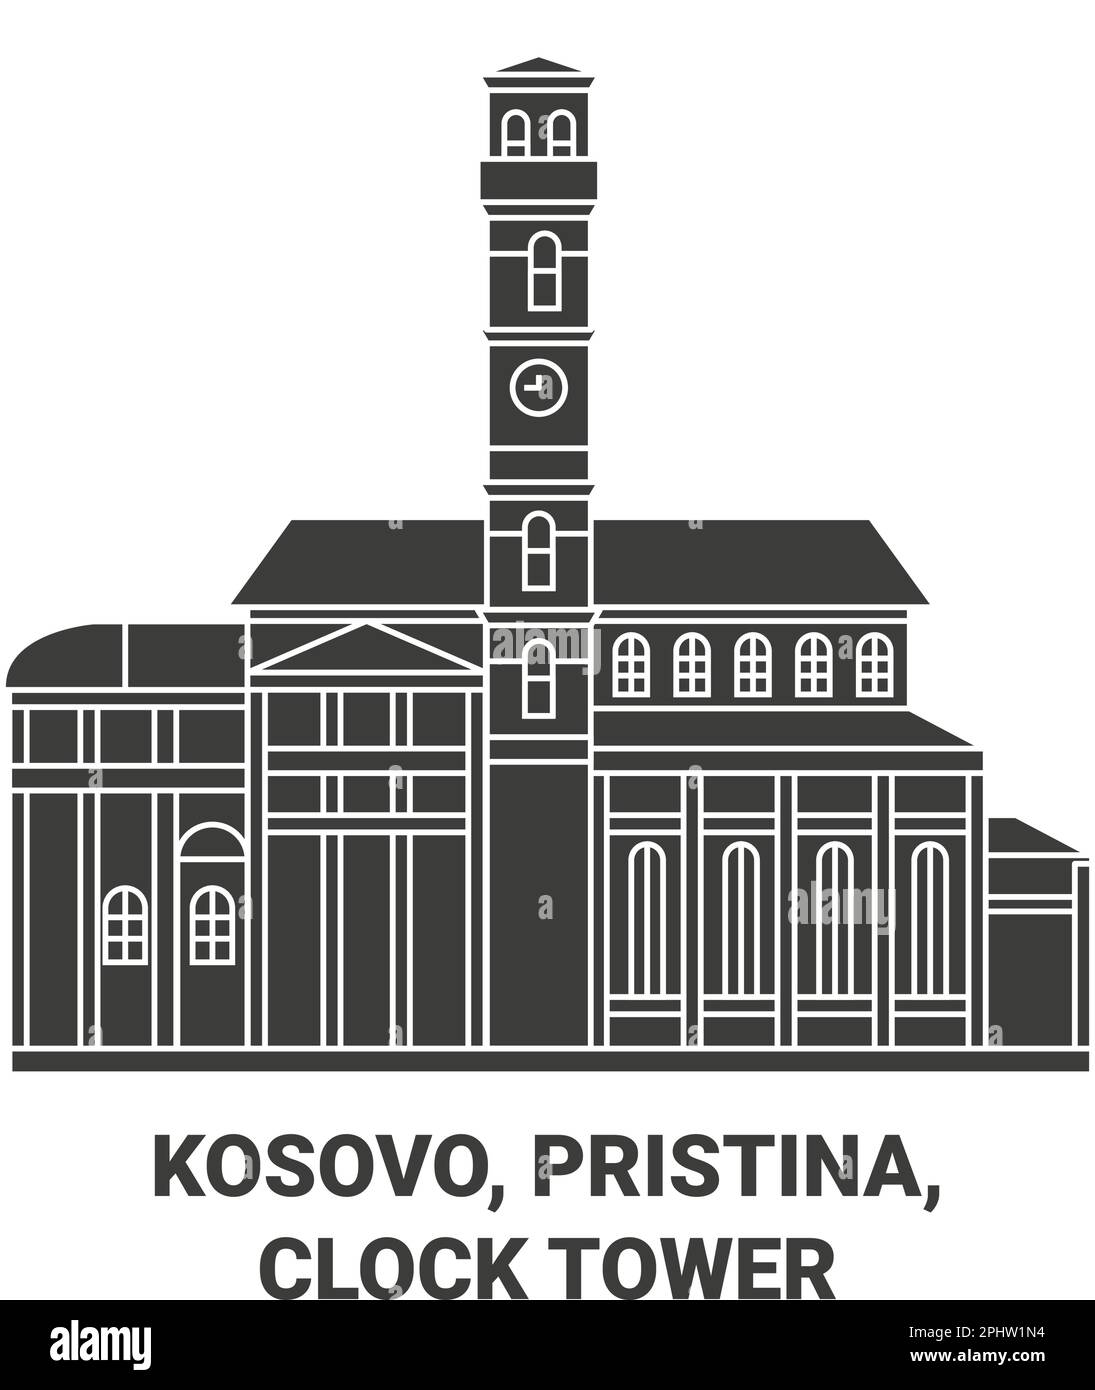 Kosovo, Pristina, Clock Tower travel landmark vector illustration Stock Vector